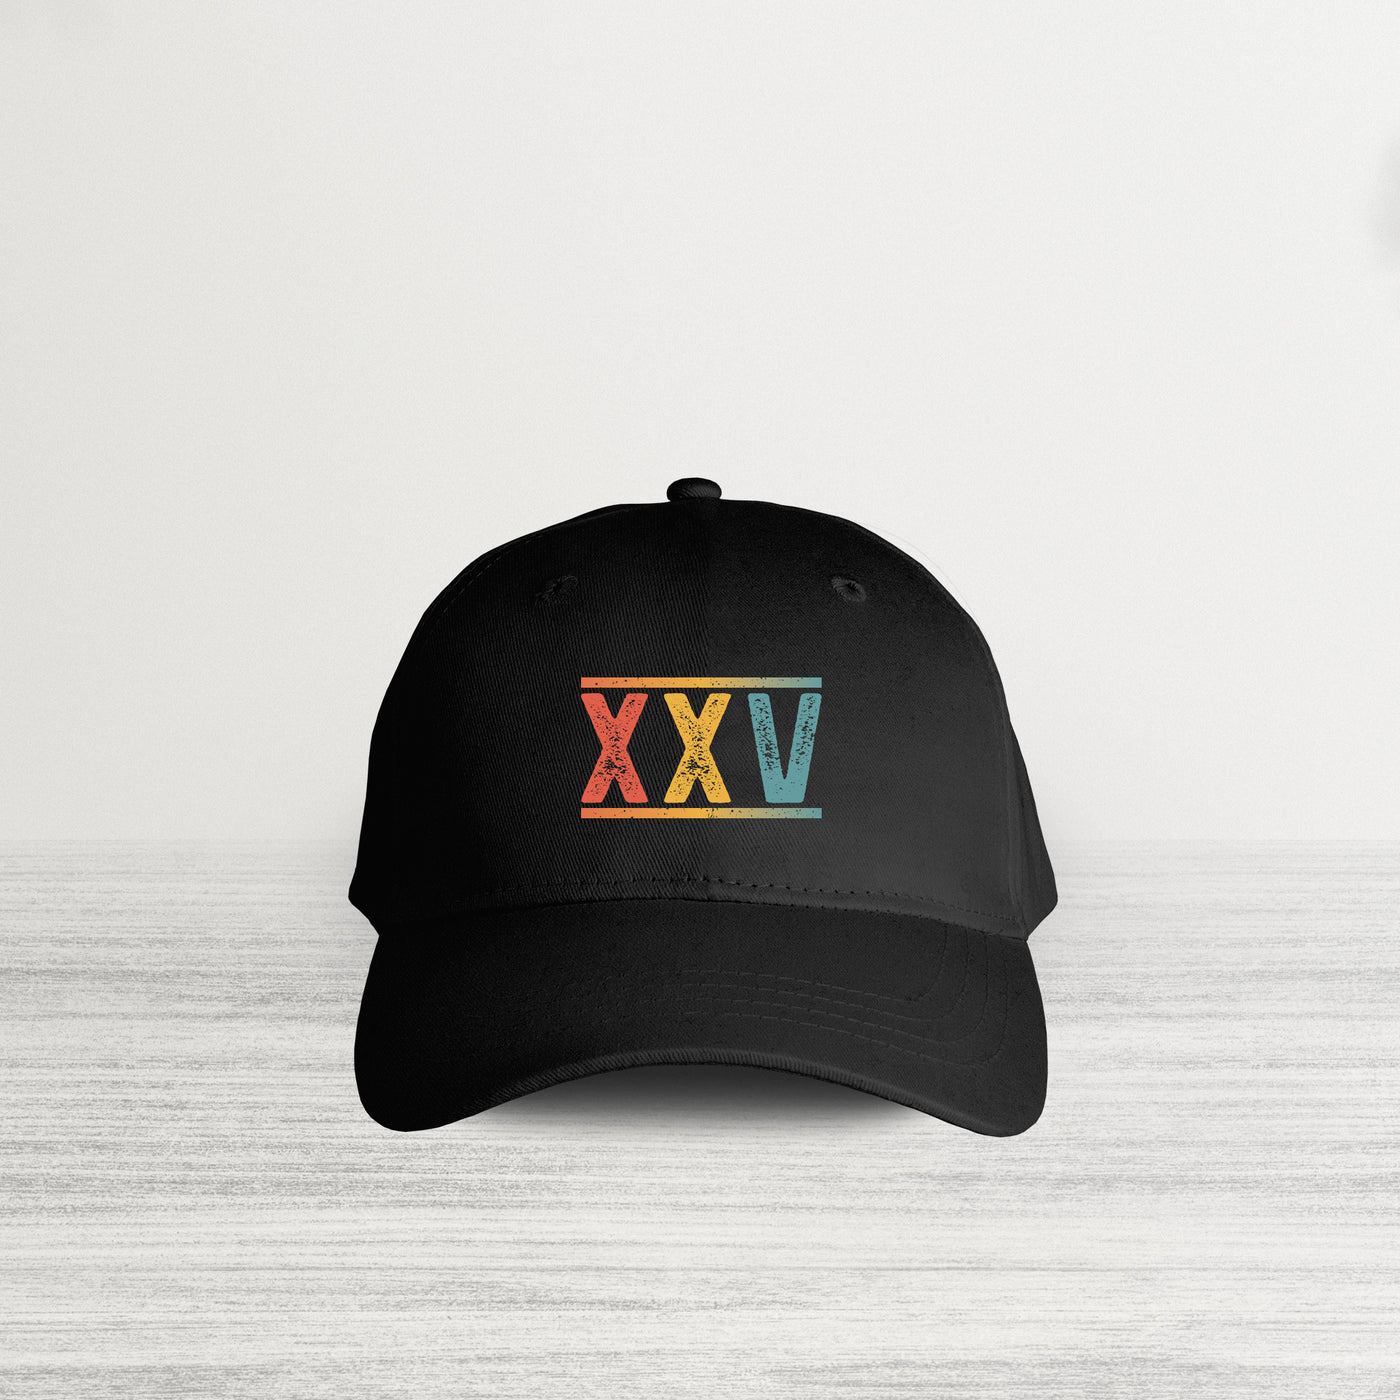 XXV Full Color HAT